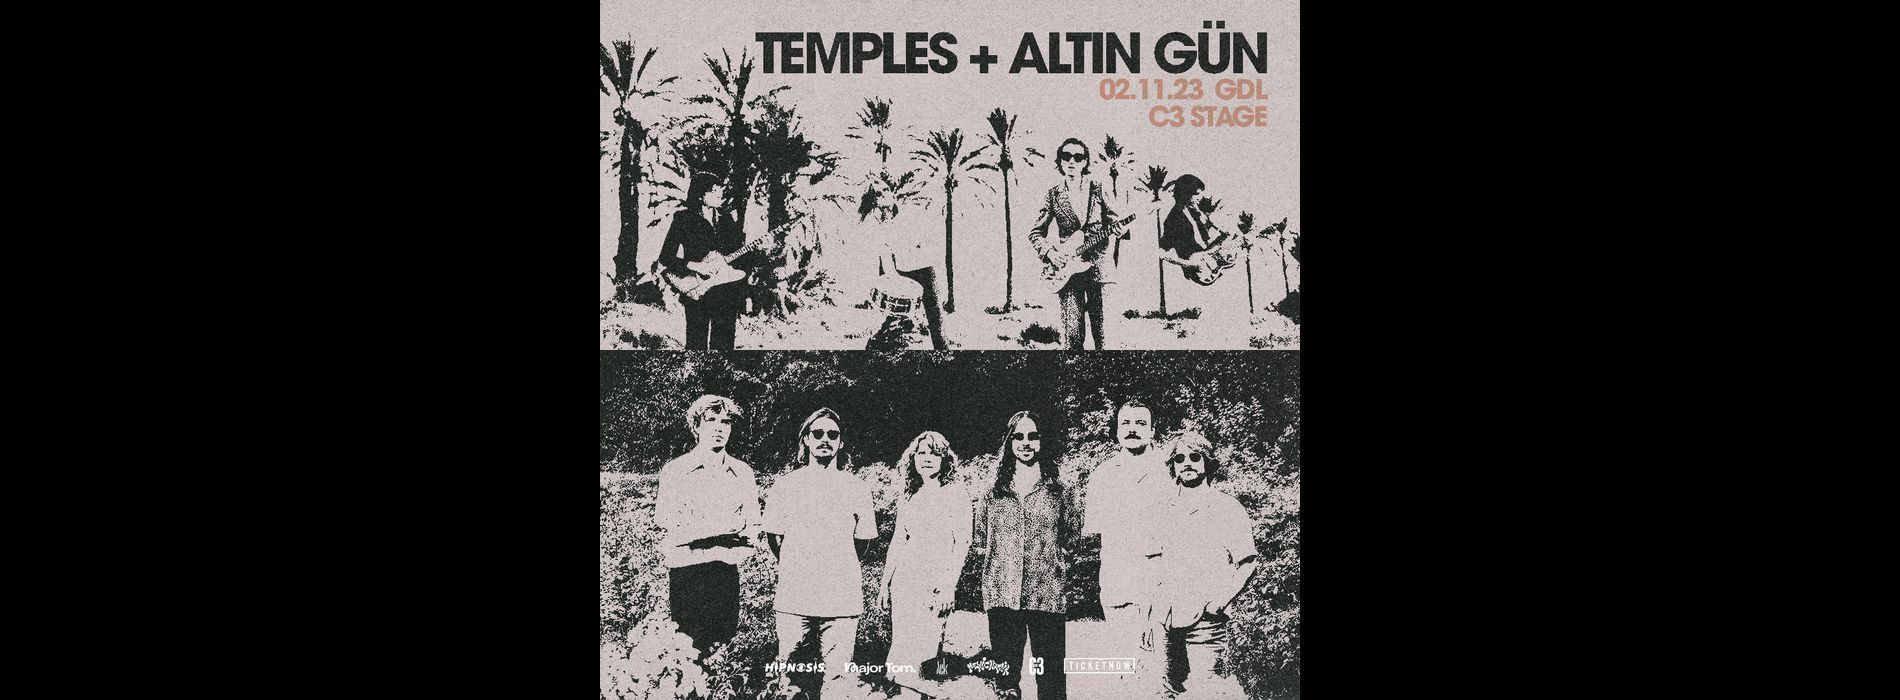 TEMPLES & ALTIN GUN EN C3 STAGE